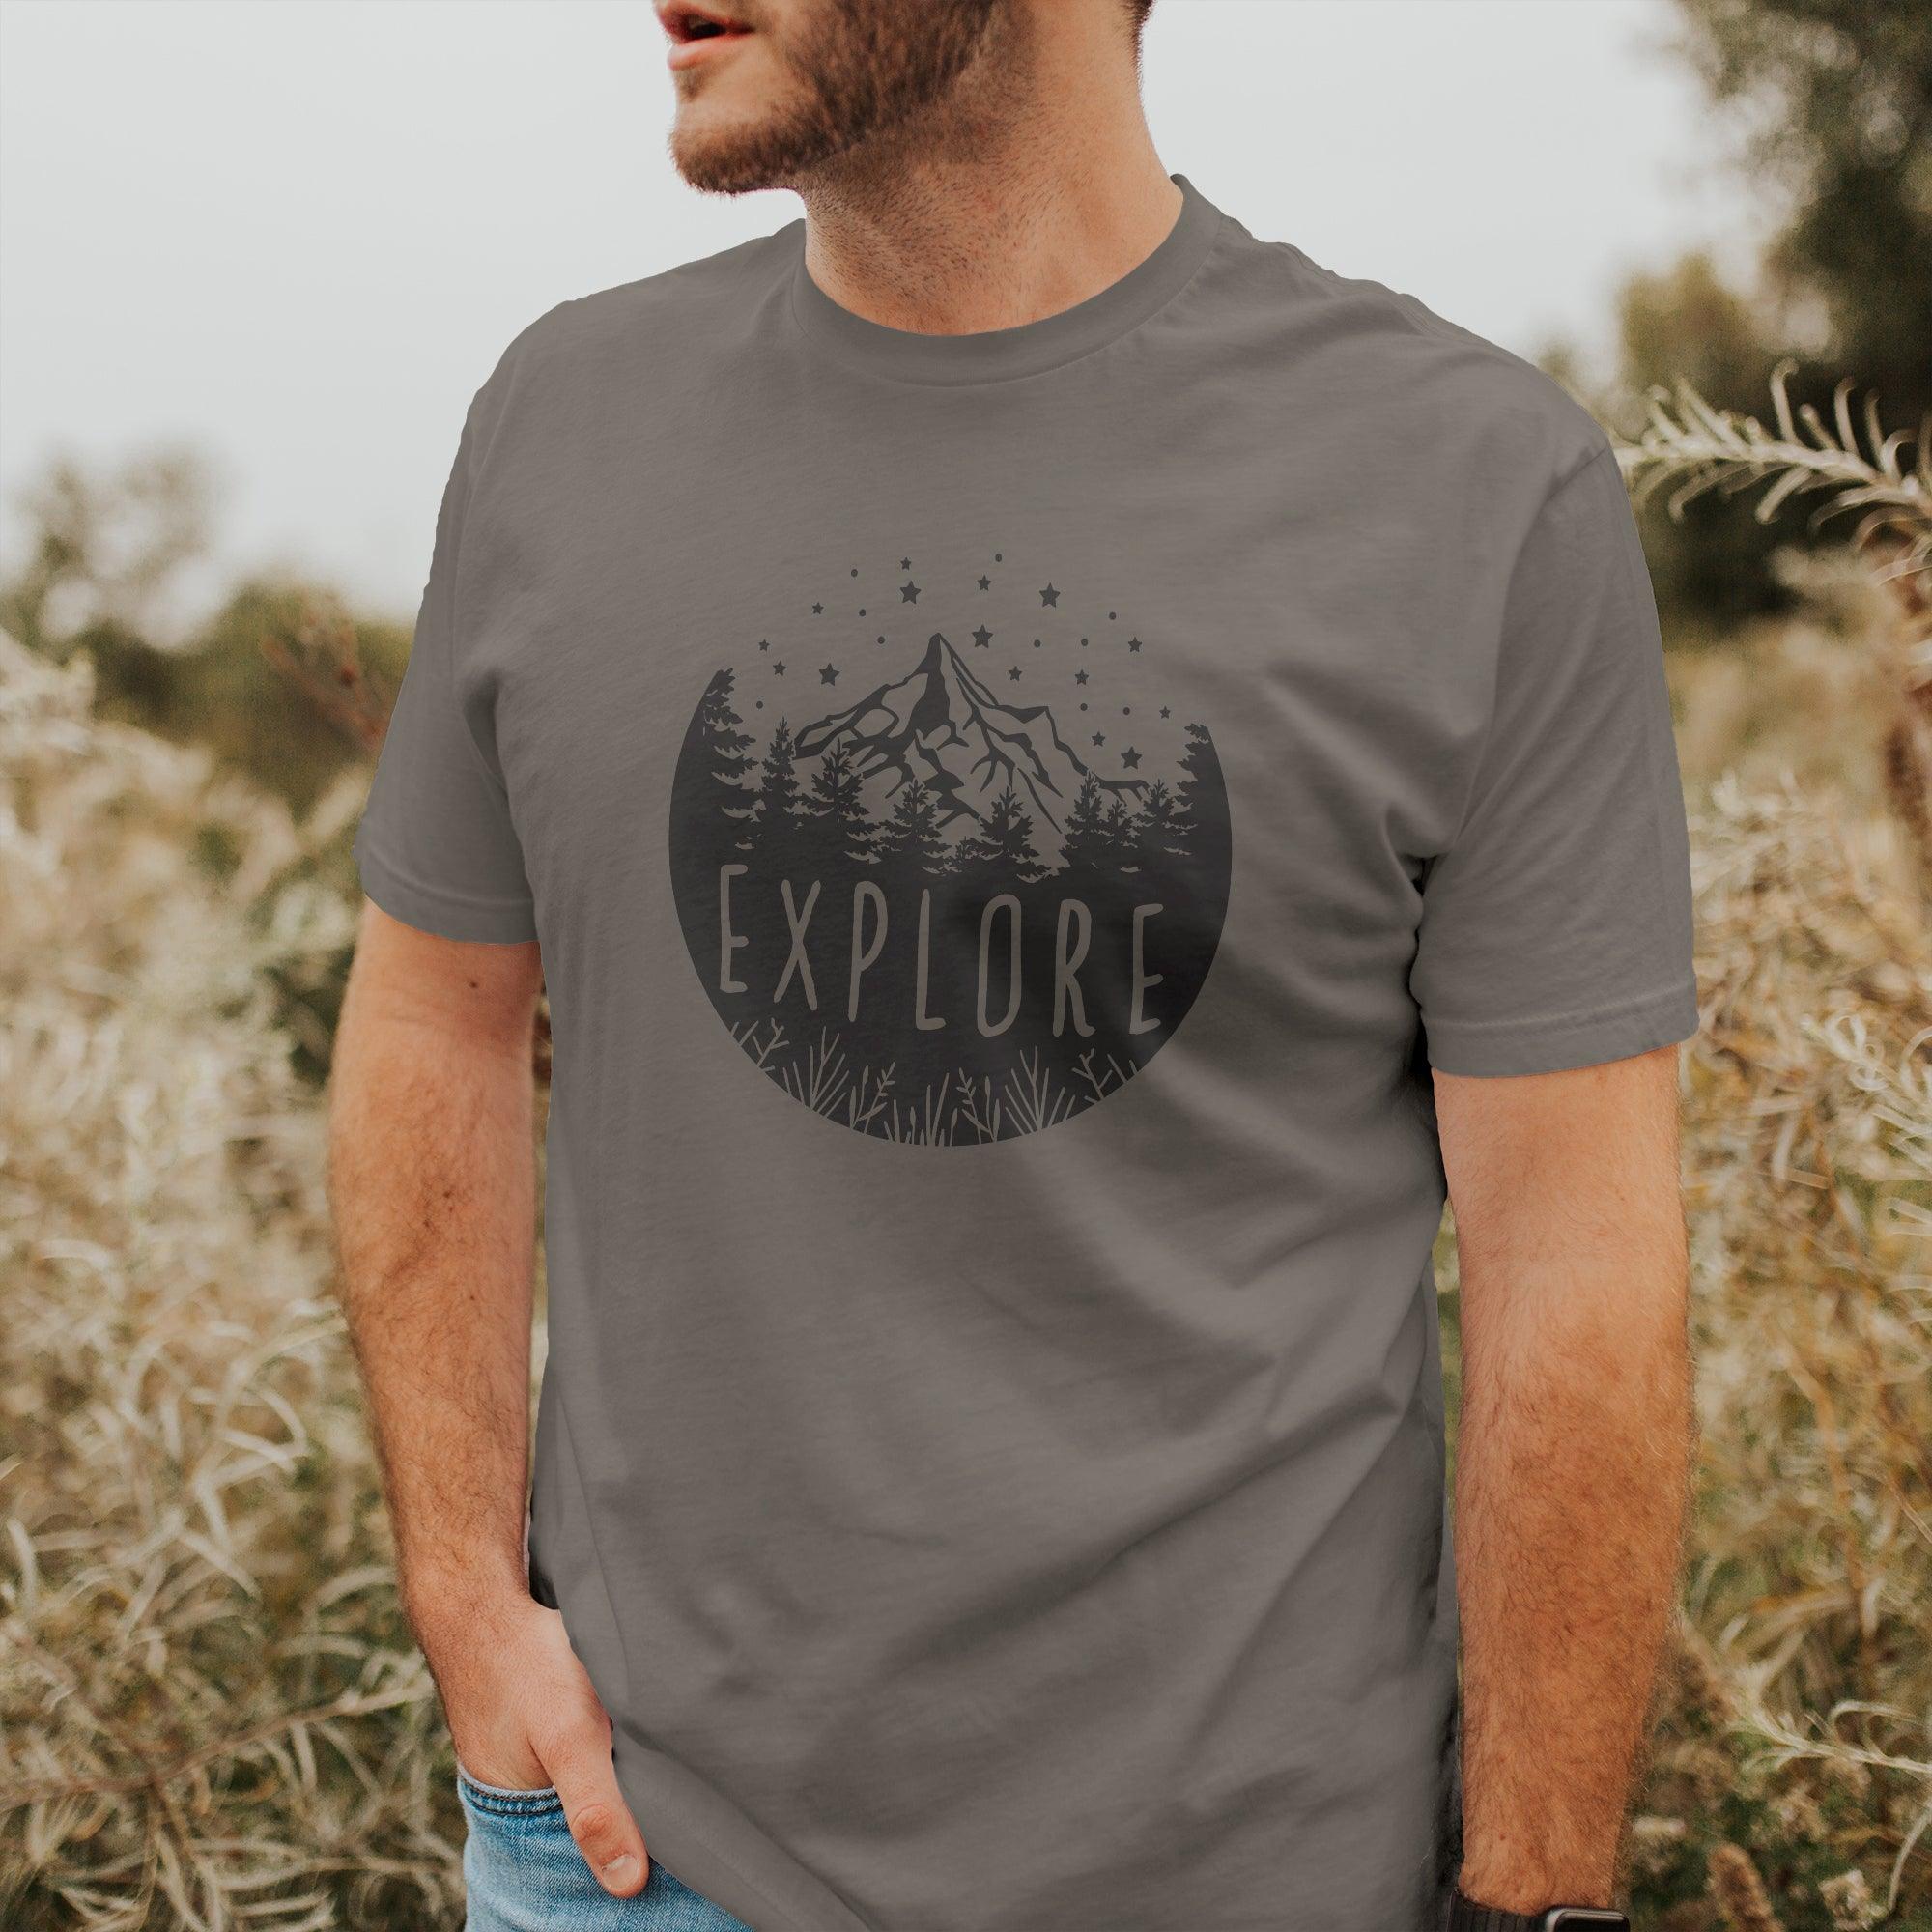 Explore - Short Sleeve T-Shirt - VirtuousWares:Global